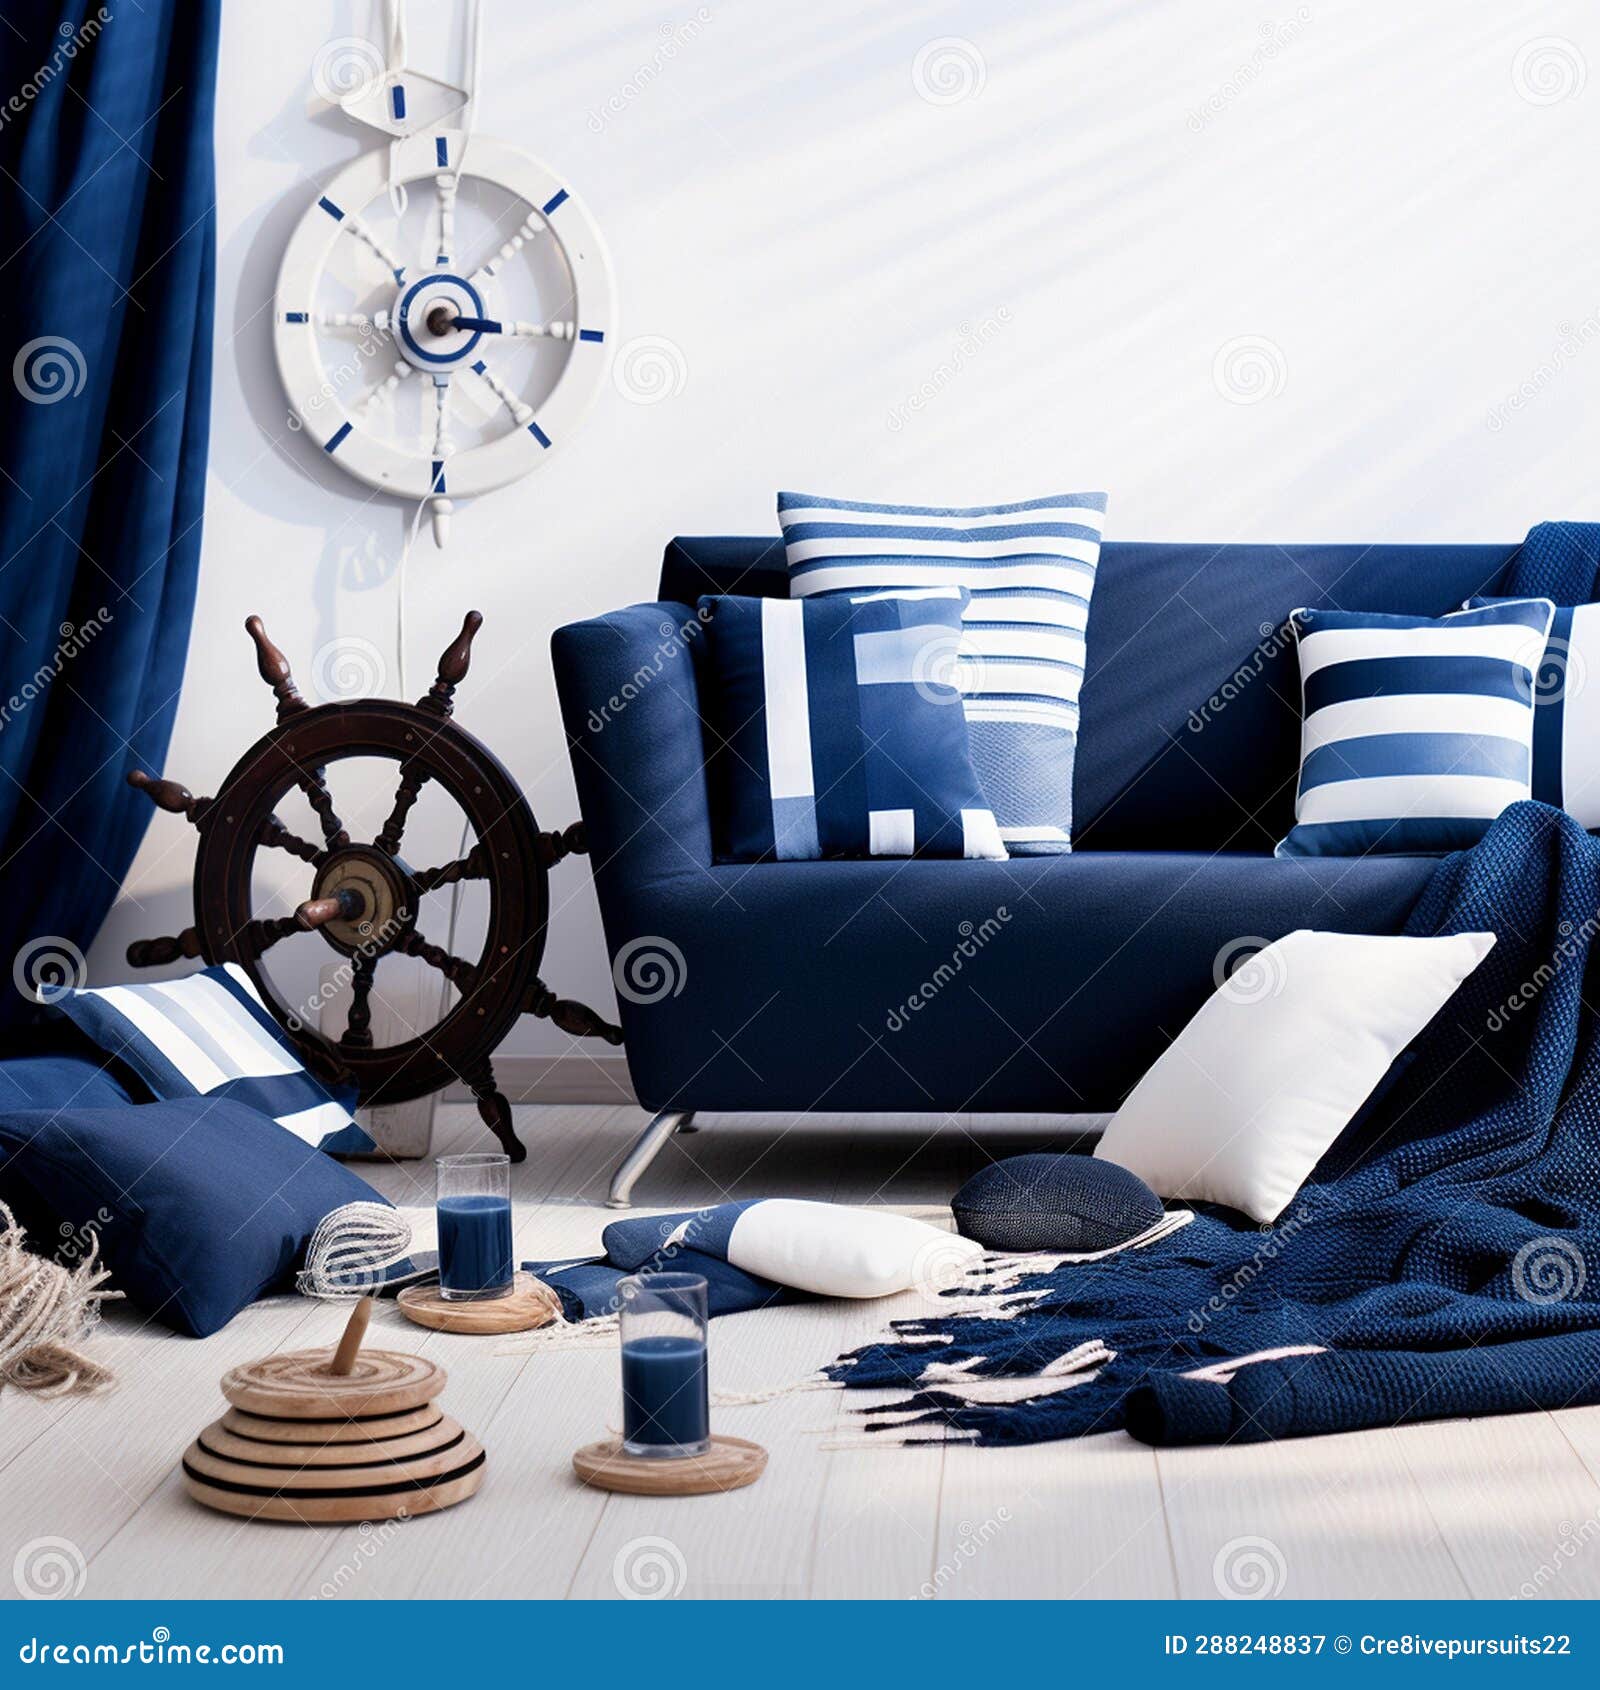 Nostalgic Nautical Mood Board Interior Design Navy Blue Stock Image - Image  of floor, table: 288248837